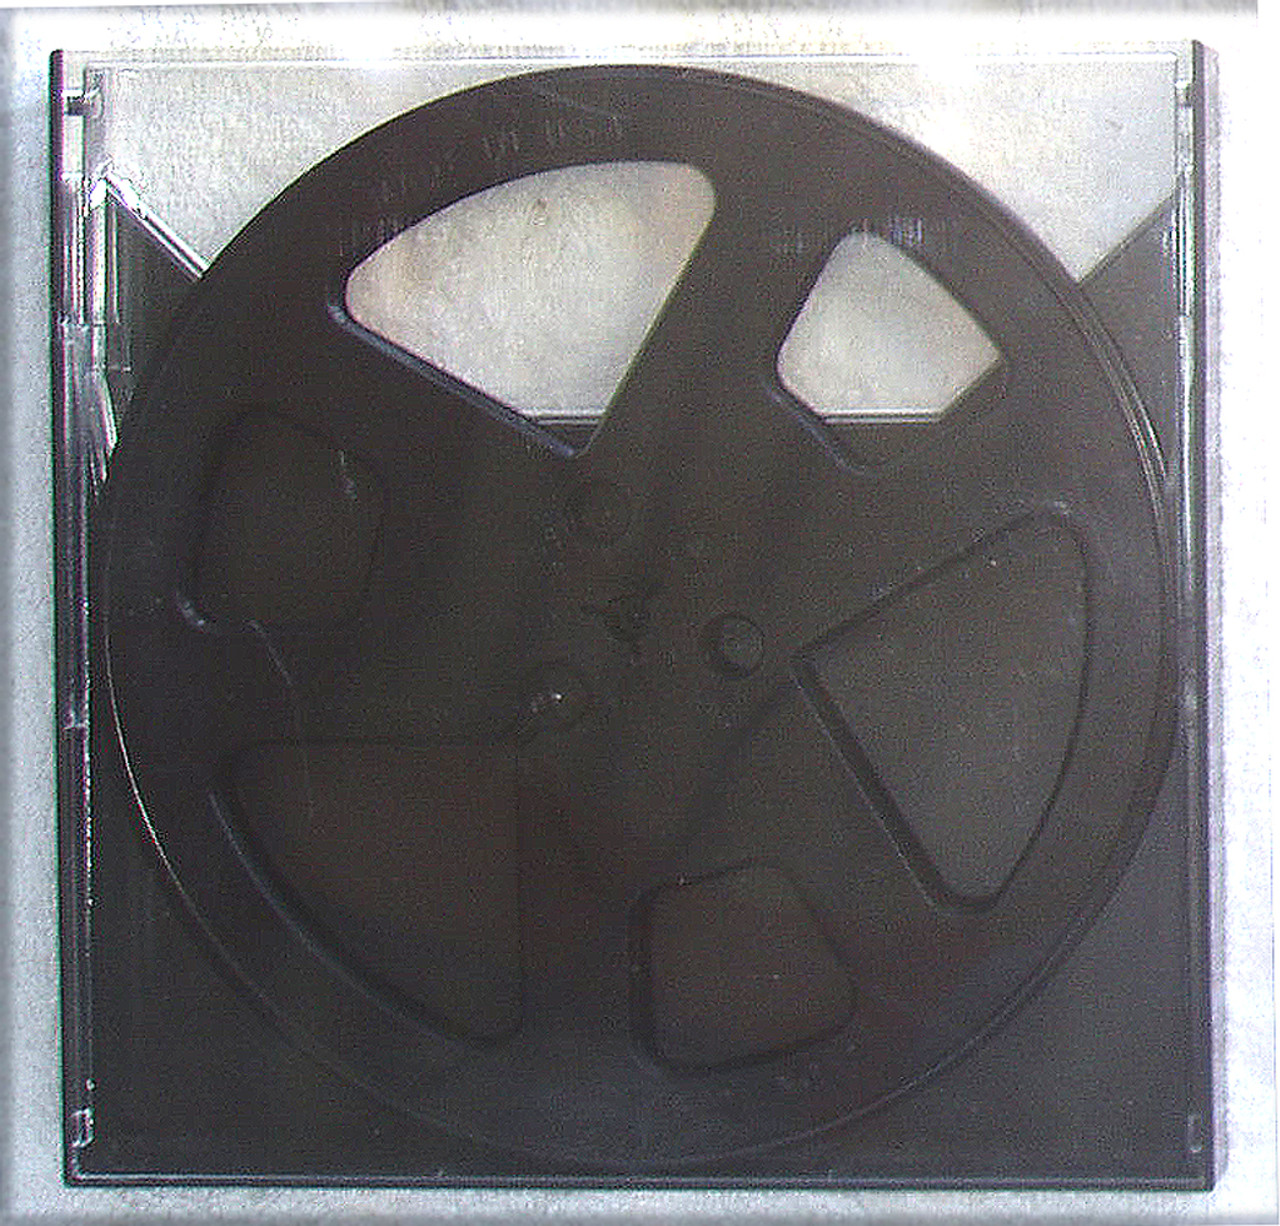 7 Inch 1/4 BLACK Plastic Reel To Reel Tape Spool (USA) EMPTY (USED Cased)